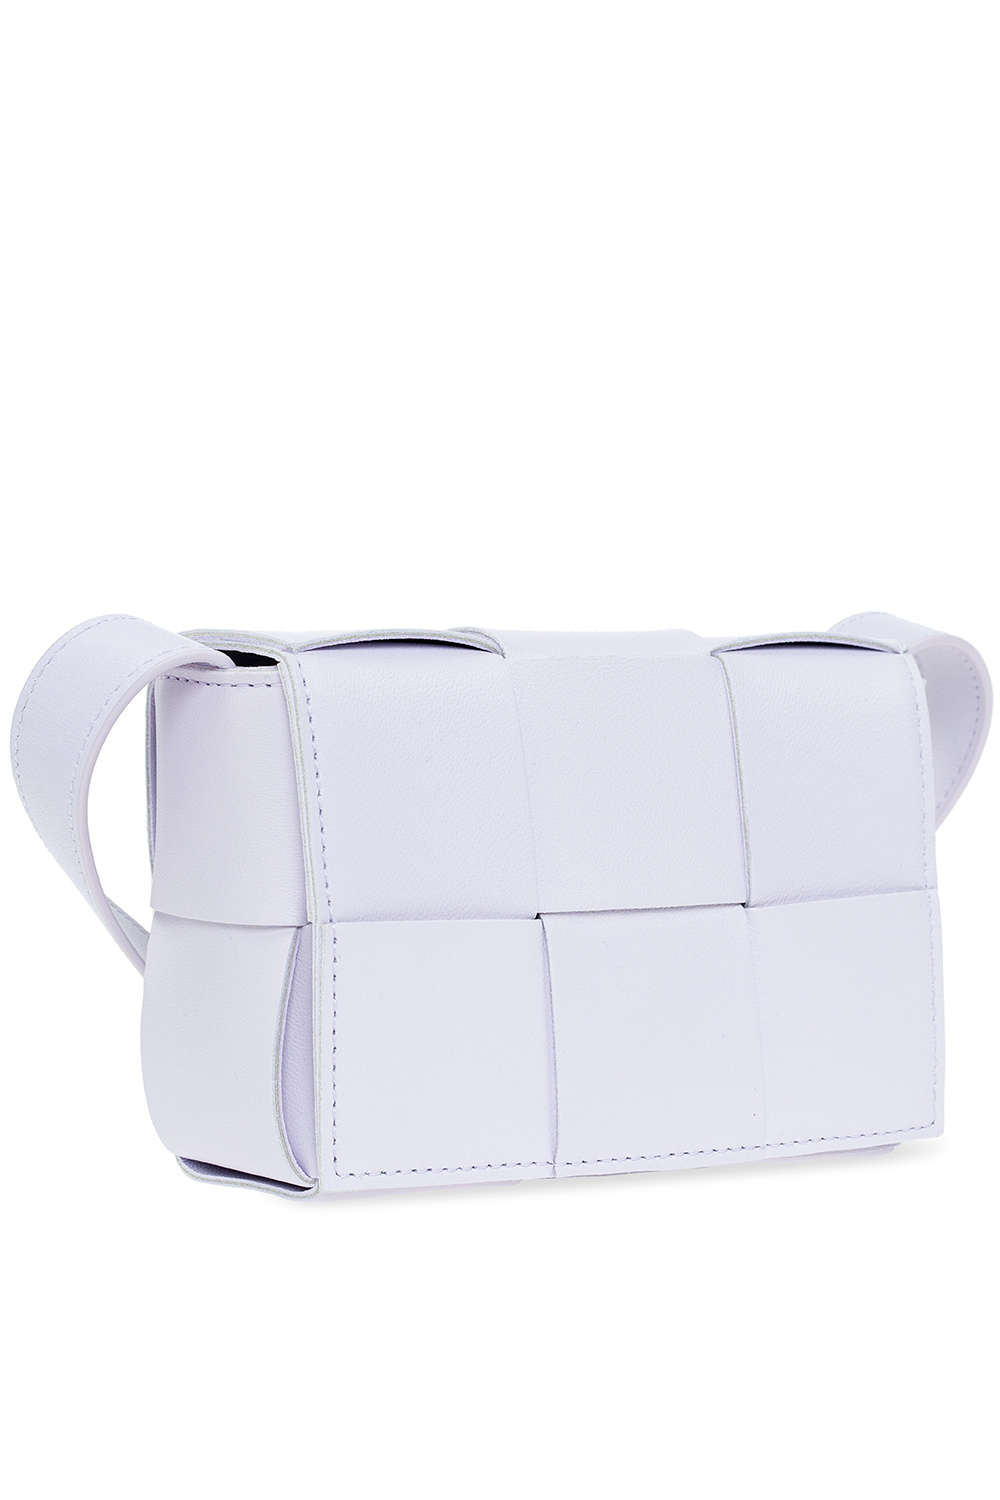 bottega pendant Veneta ‘Cassette Candy’ shoulder bag